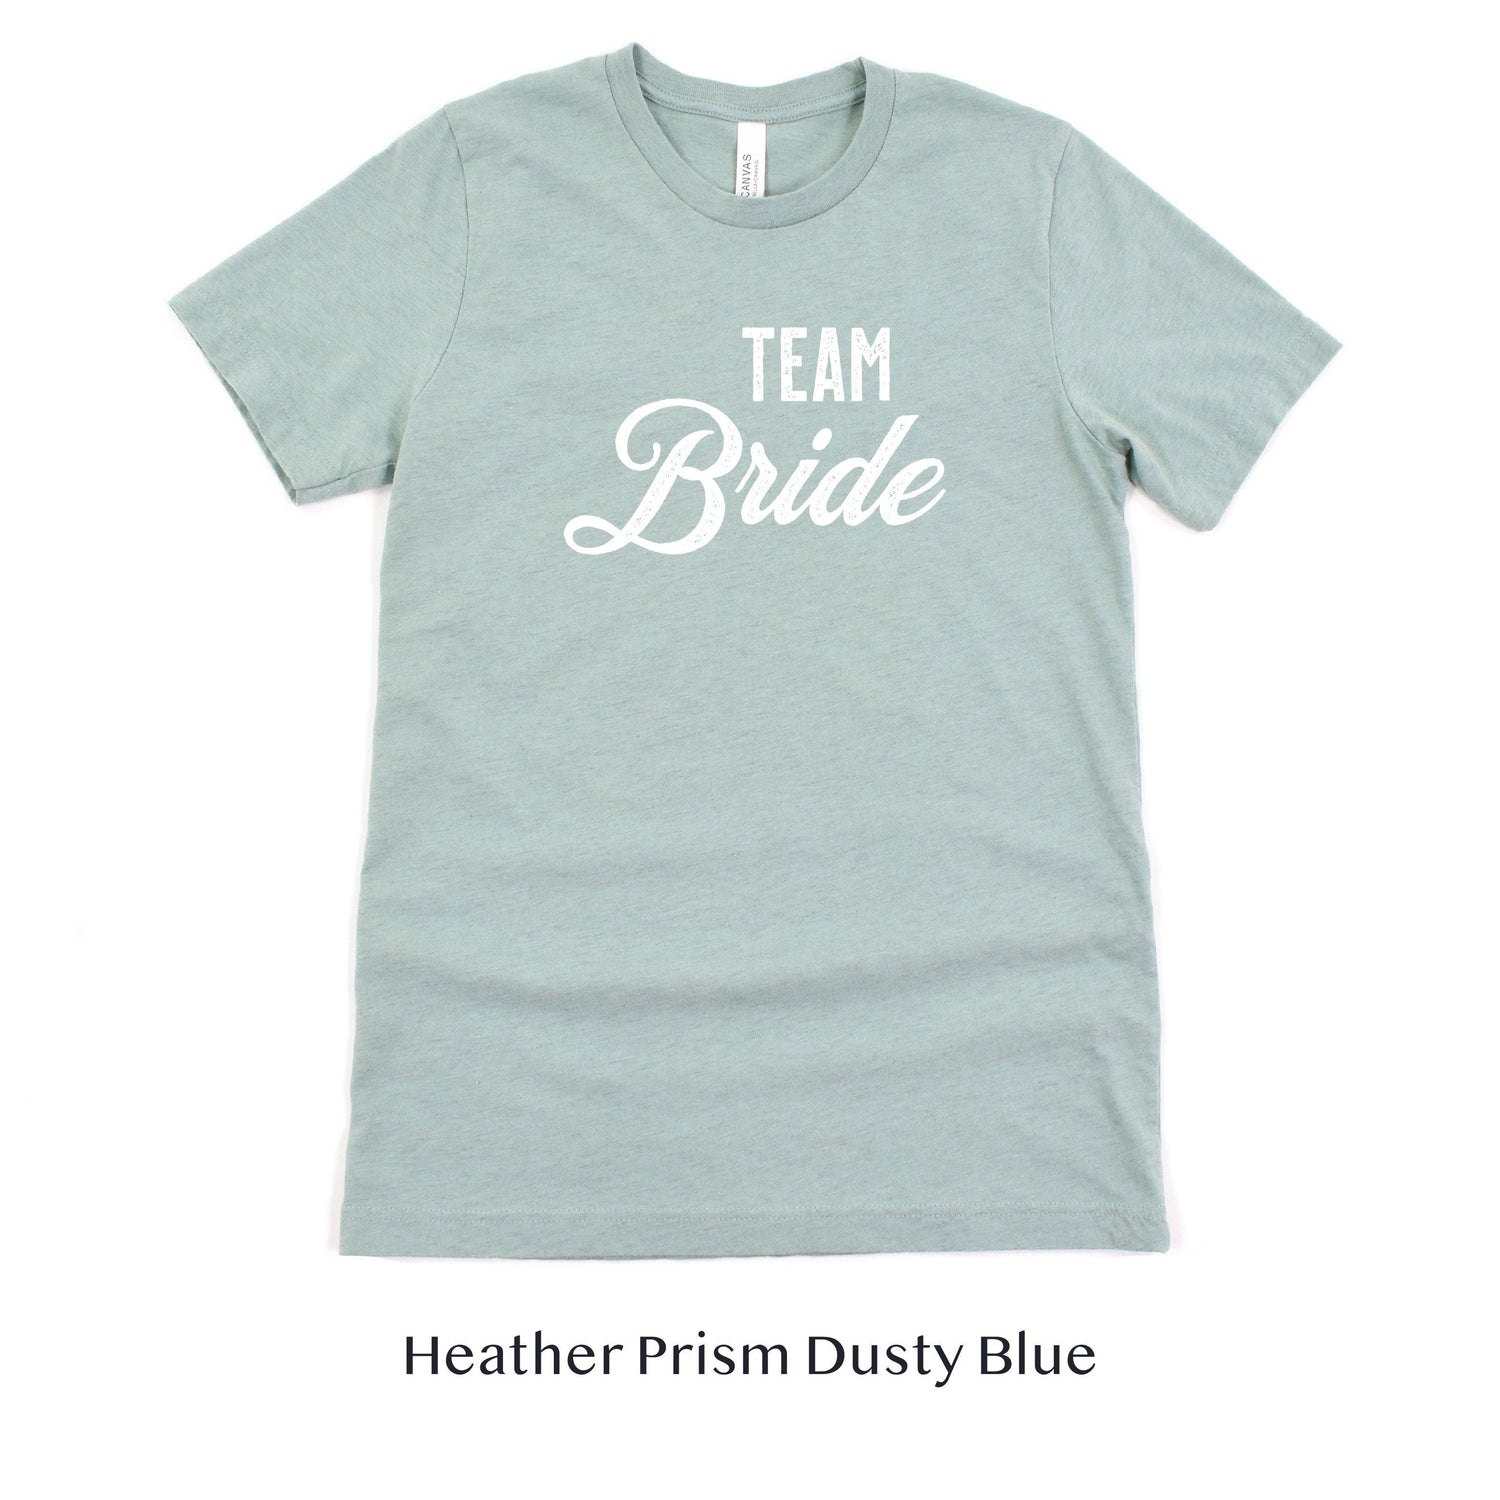 Team Bride - Vintage Romance Wedding Party Unisex t-shirt by Oaklynn Lane